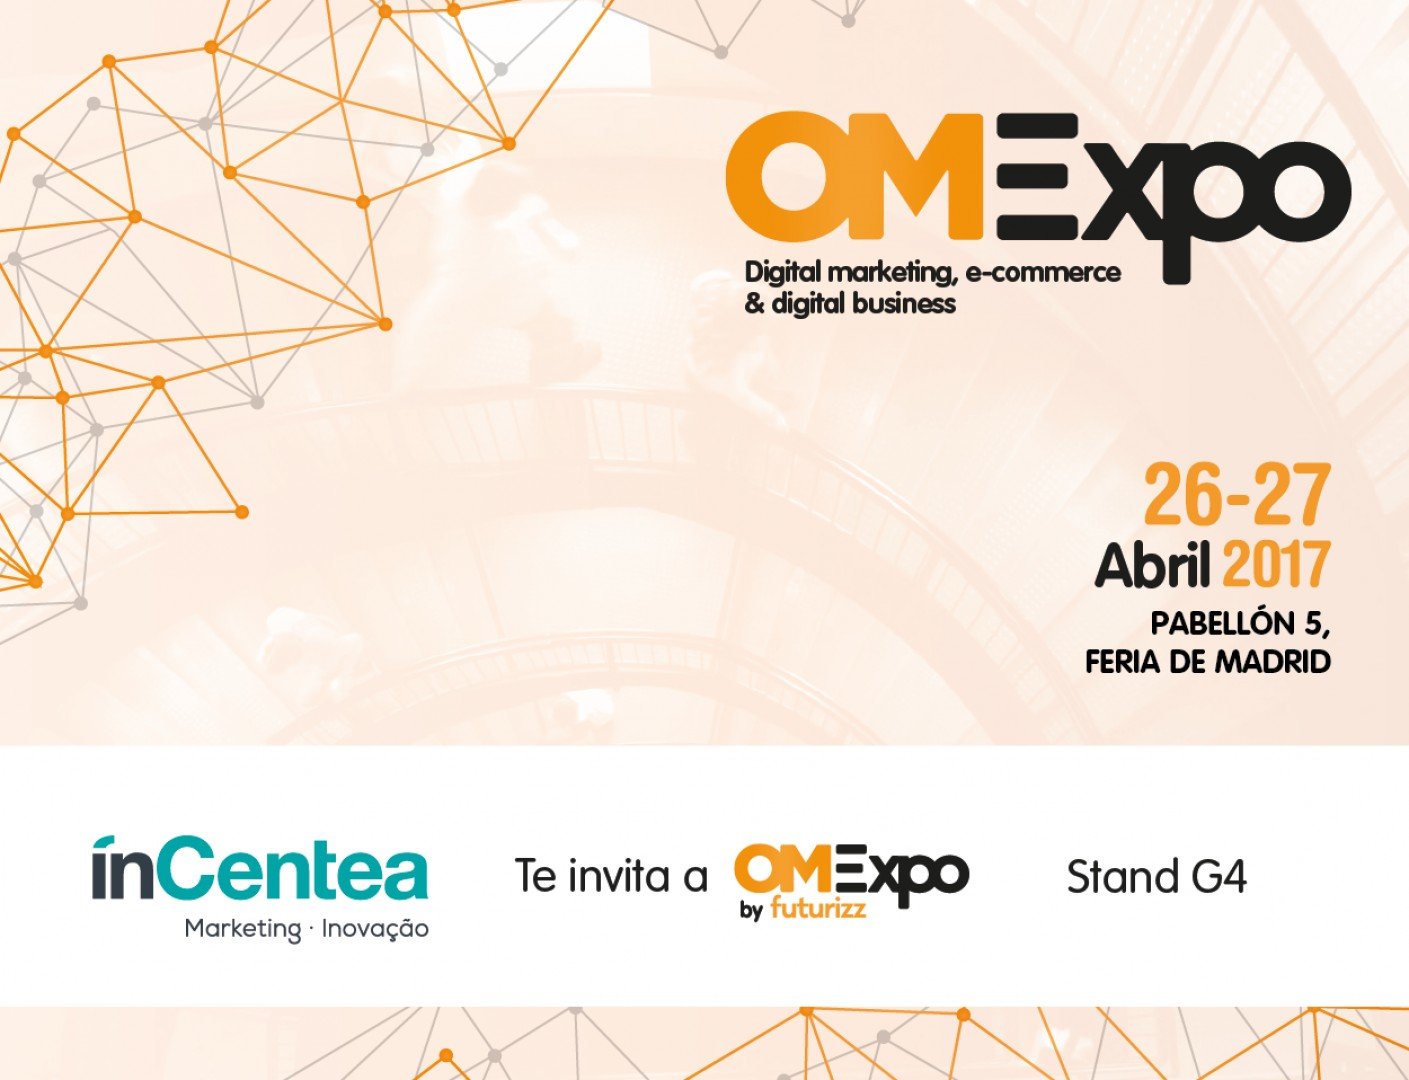 inCentea Marketing et Innovation sera présent à OMExpo 2017